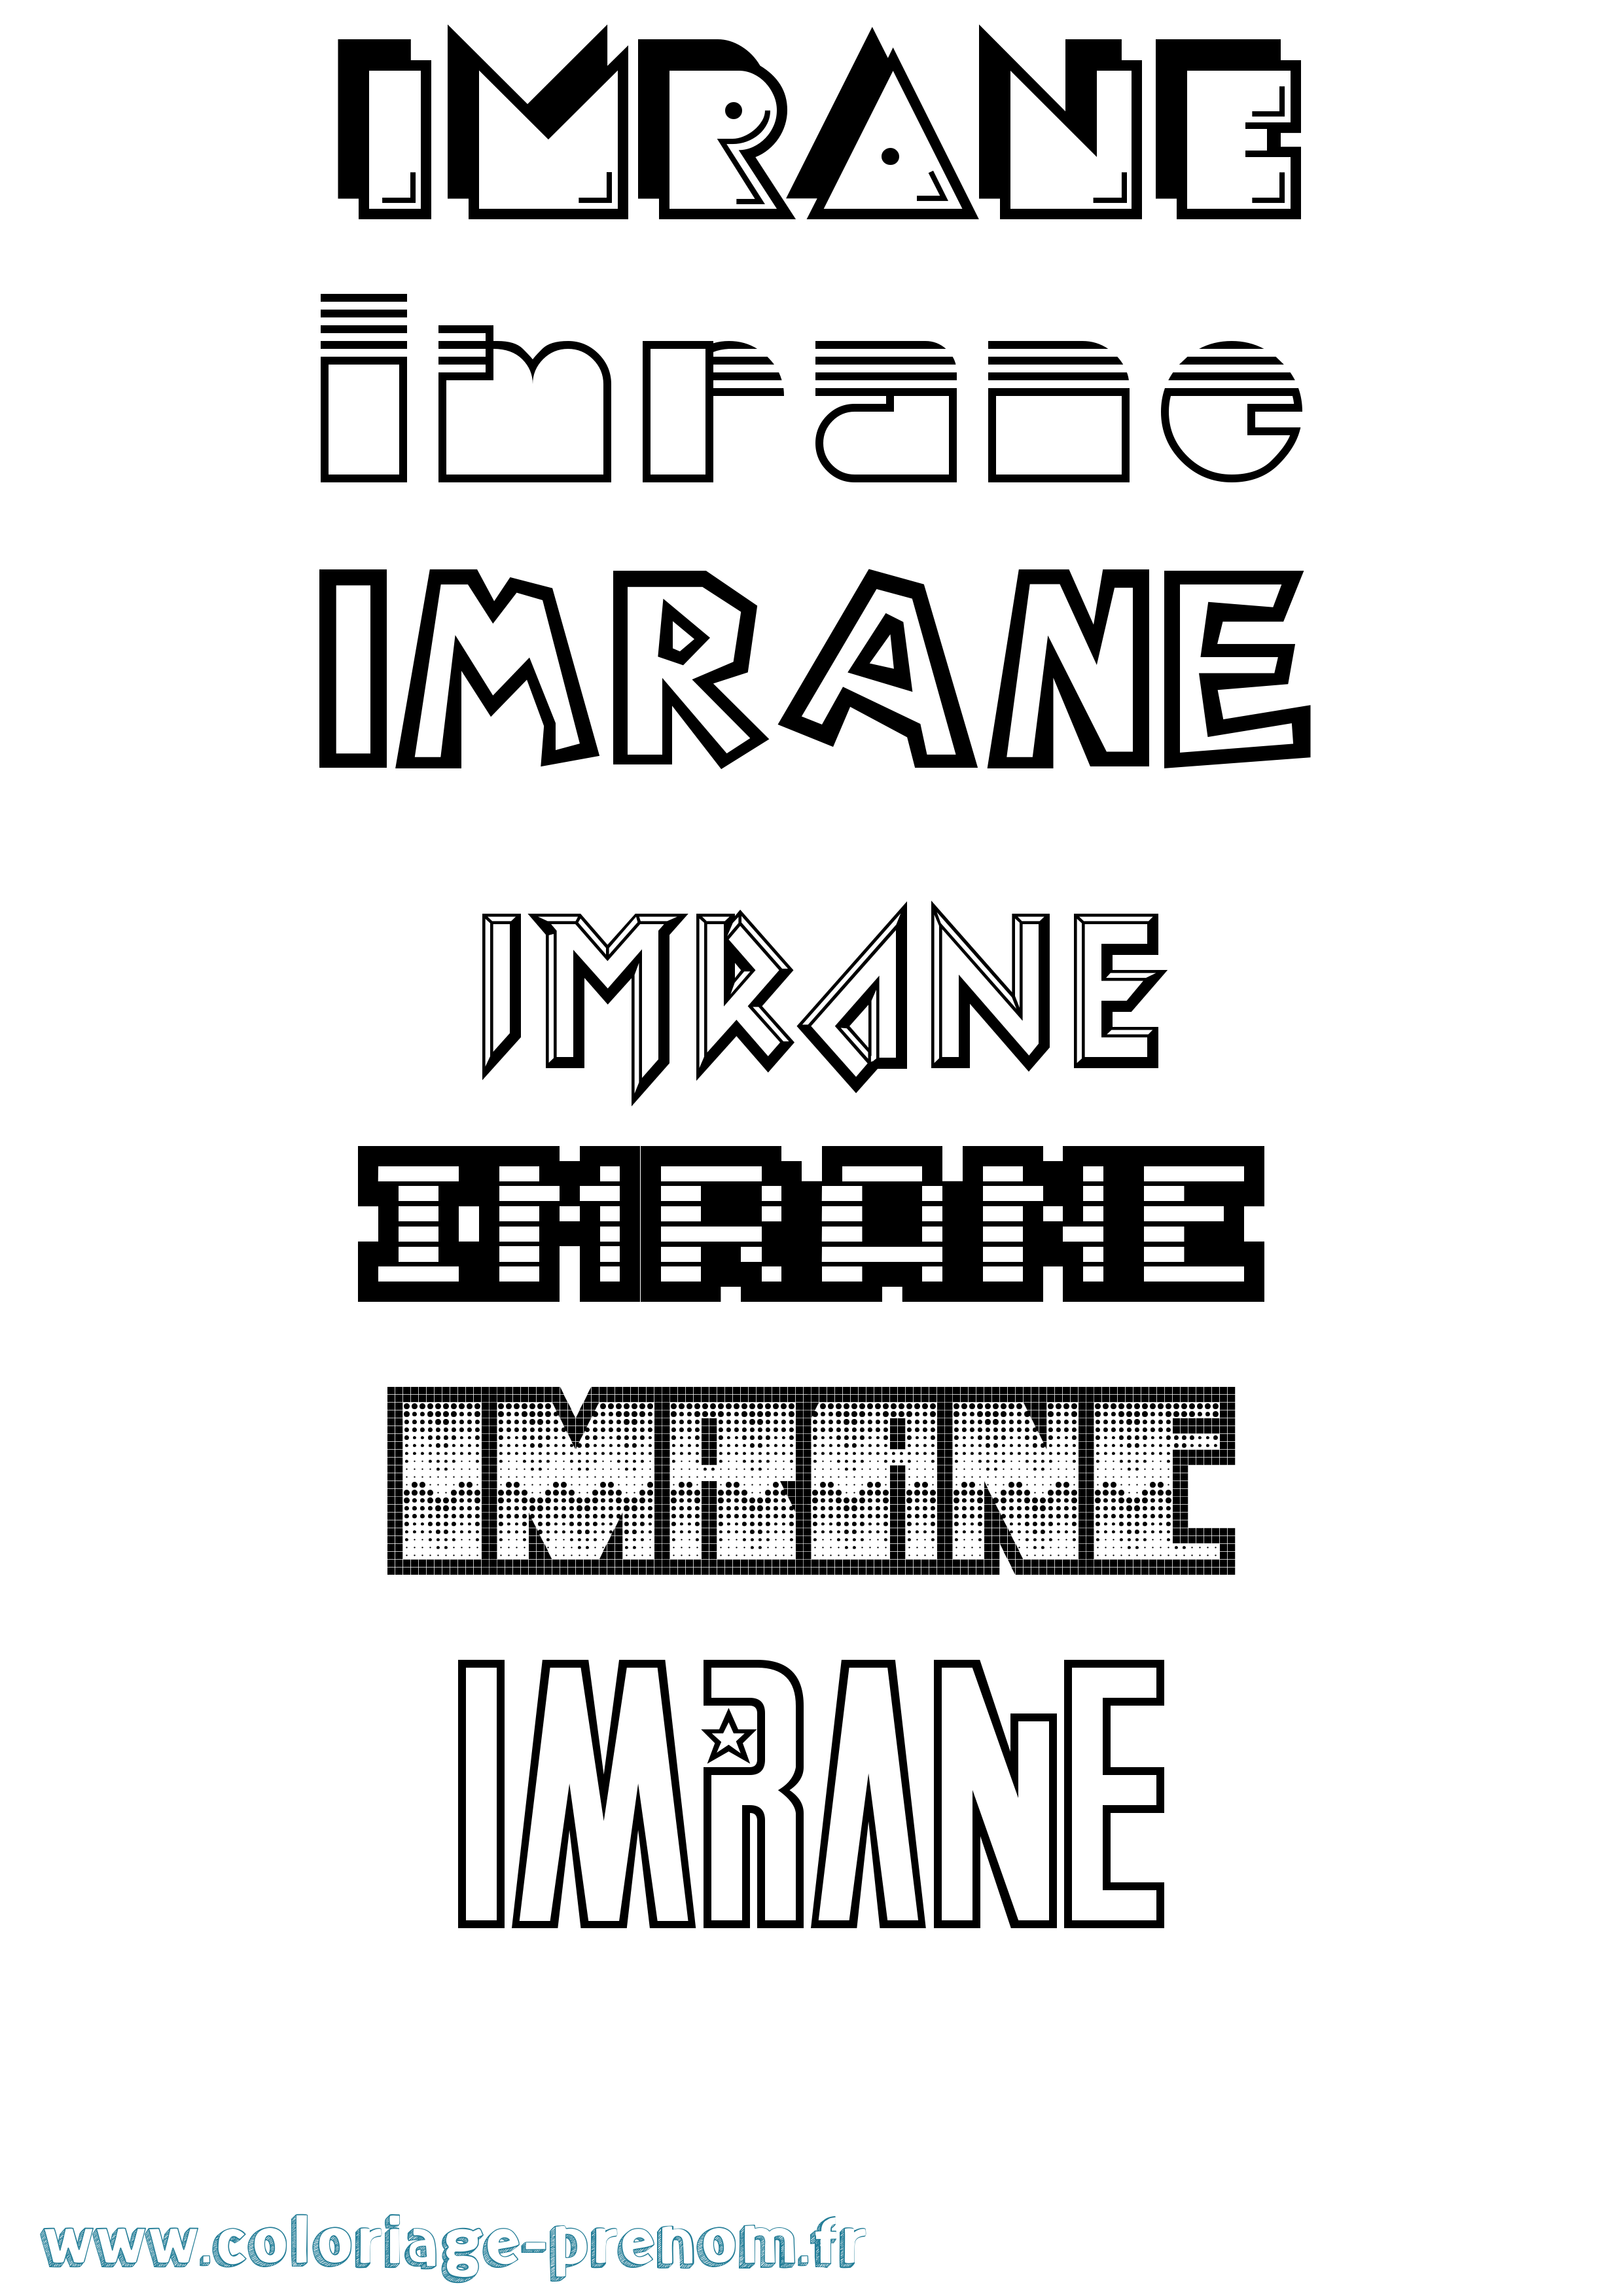 Coloriage prénom Imrane